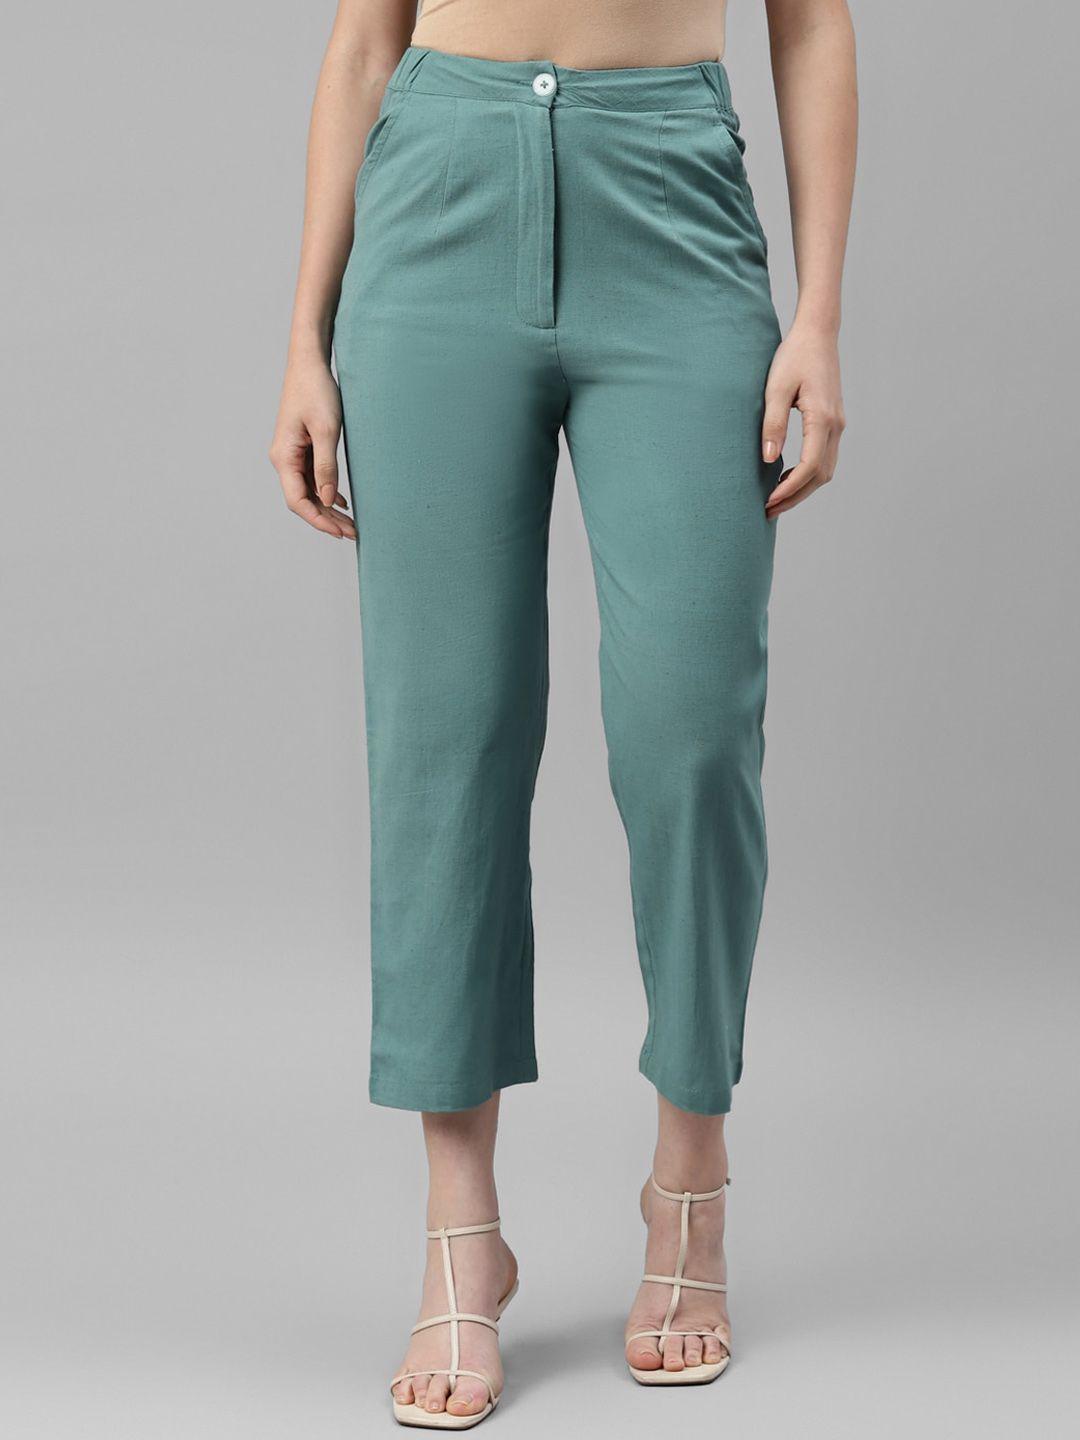 deebaco women sea green pencil slim fit high-rise trousers